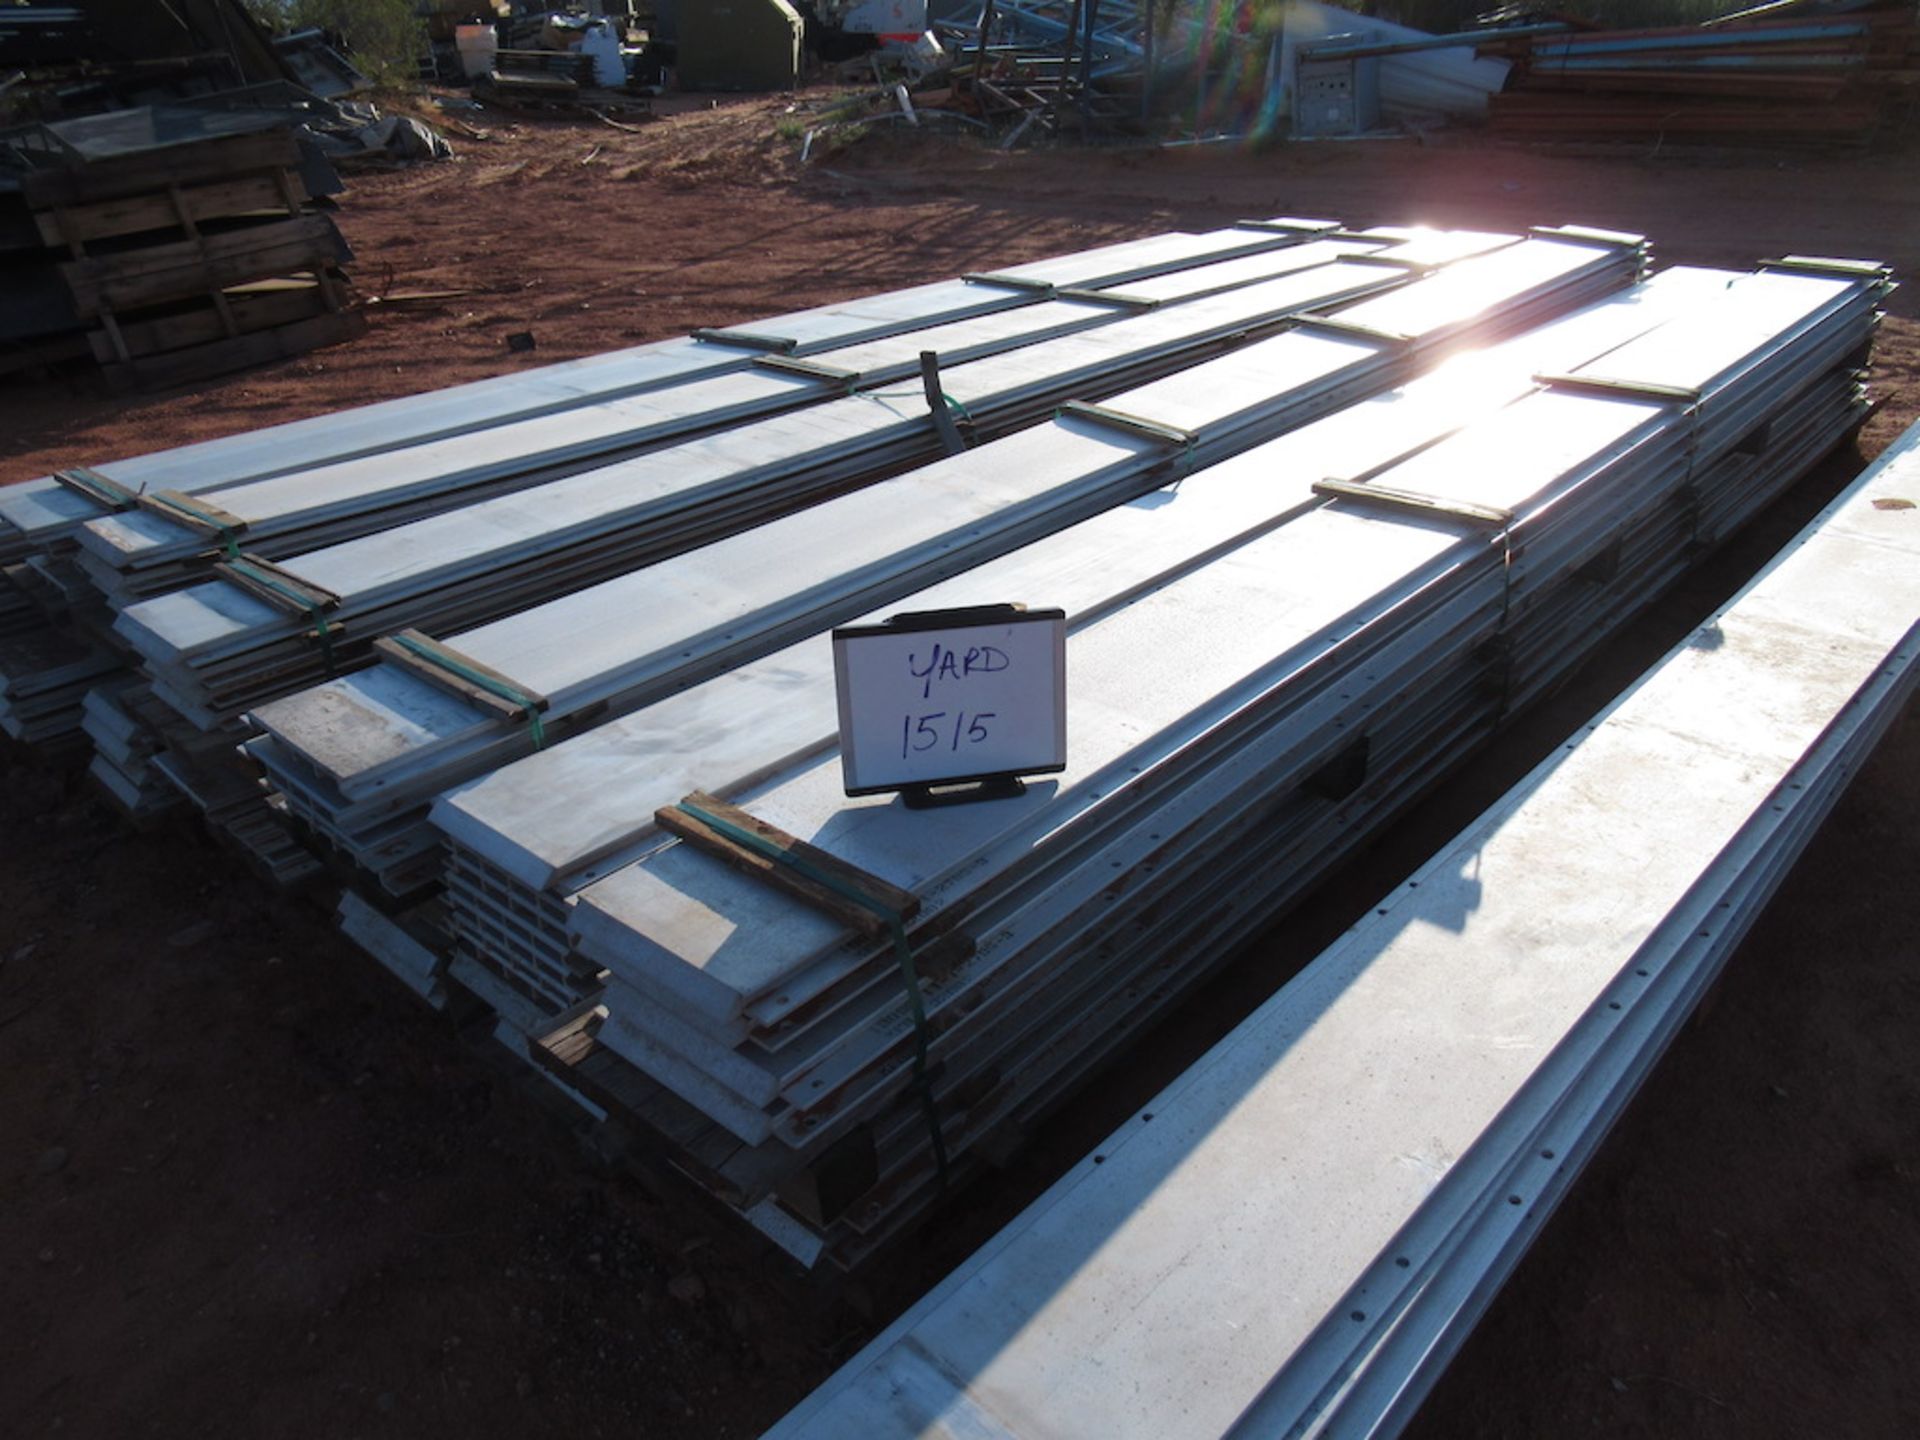 Lot of 74 Aluminum Planks Decking, 74, 6660 lbs, 192"x14"x1.5" (each), 192"x14"x26" (pallet), ISLE 2